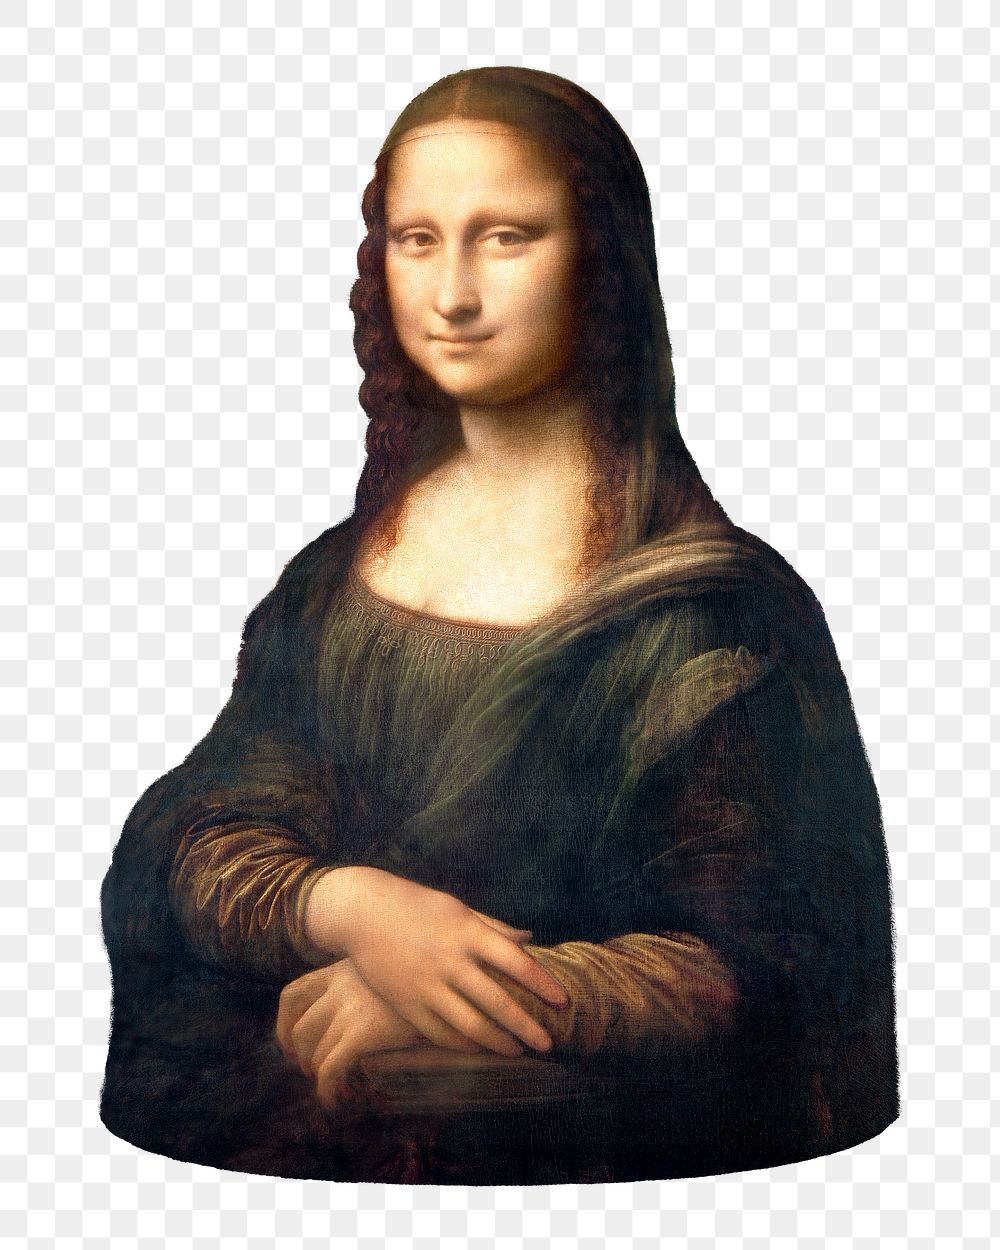 Mona Lisa png sticker, Leonardo da Vinci's famous painting on transparent background, remixed by rawpixel